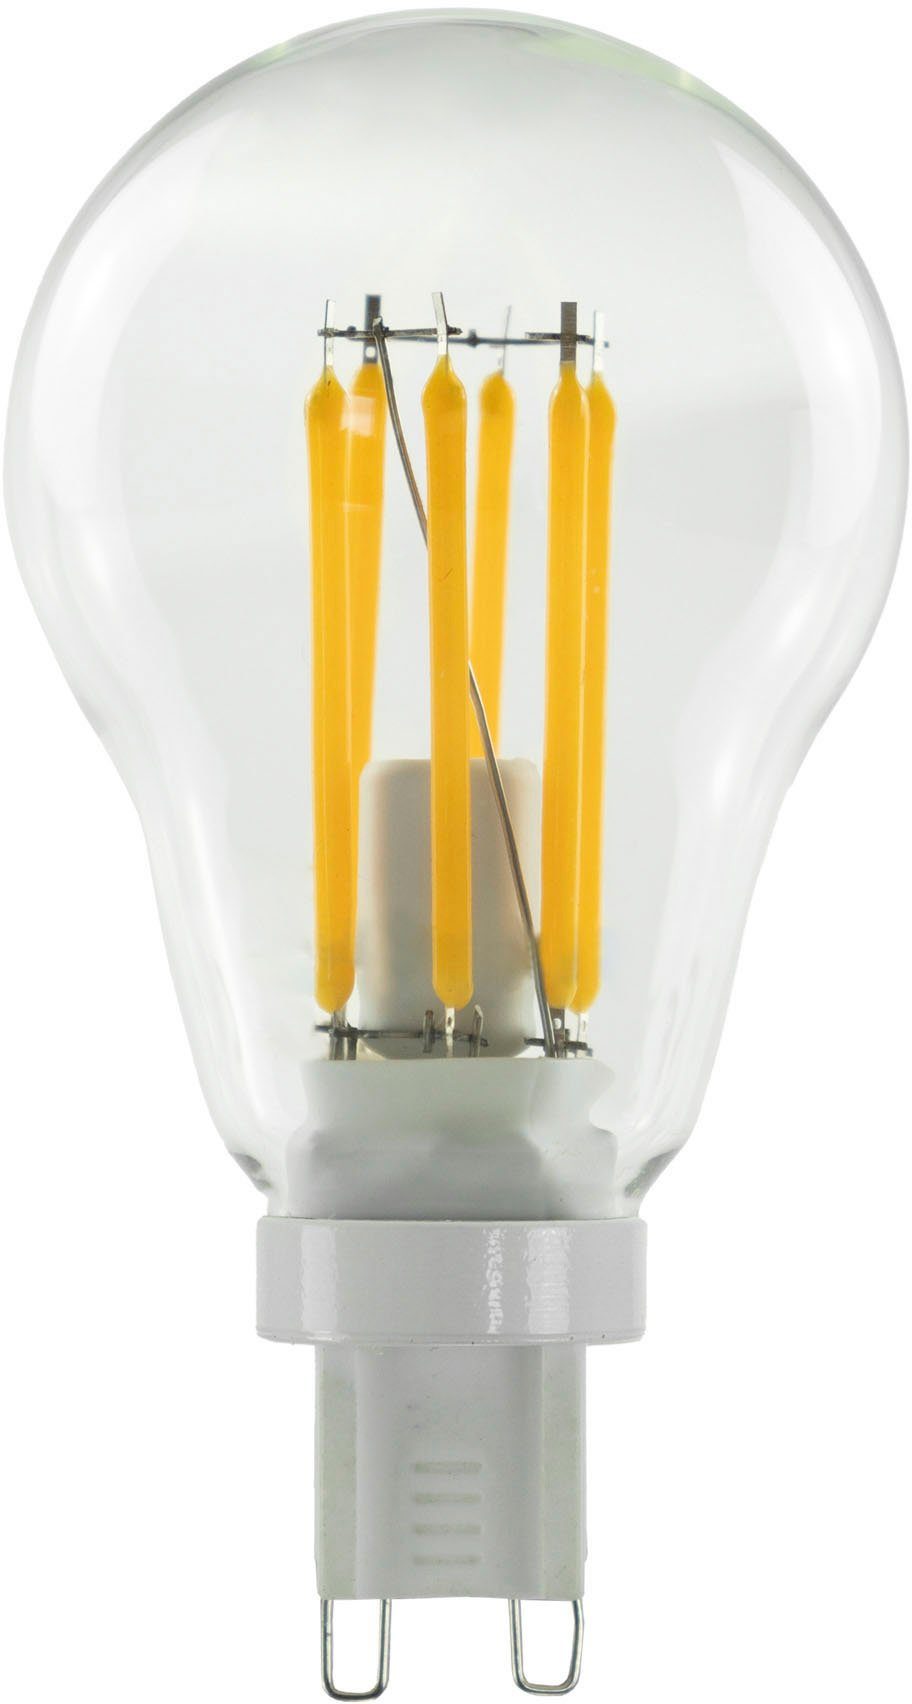 SEGULA LED Glühlampe A15 - G9 LED-Leuchtmittel, G9, 1 St., Warmweiß, LED  Glühlampe A15 - G9, 2700K, klar, 3,2W, CRI 90, dimmbar